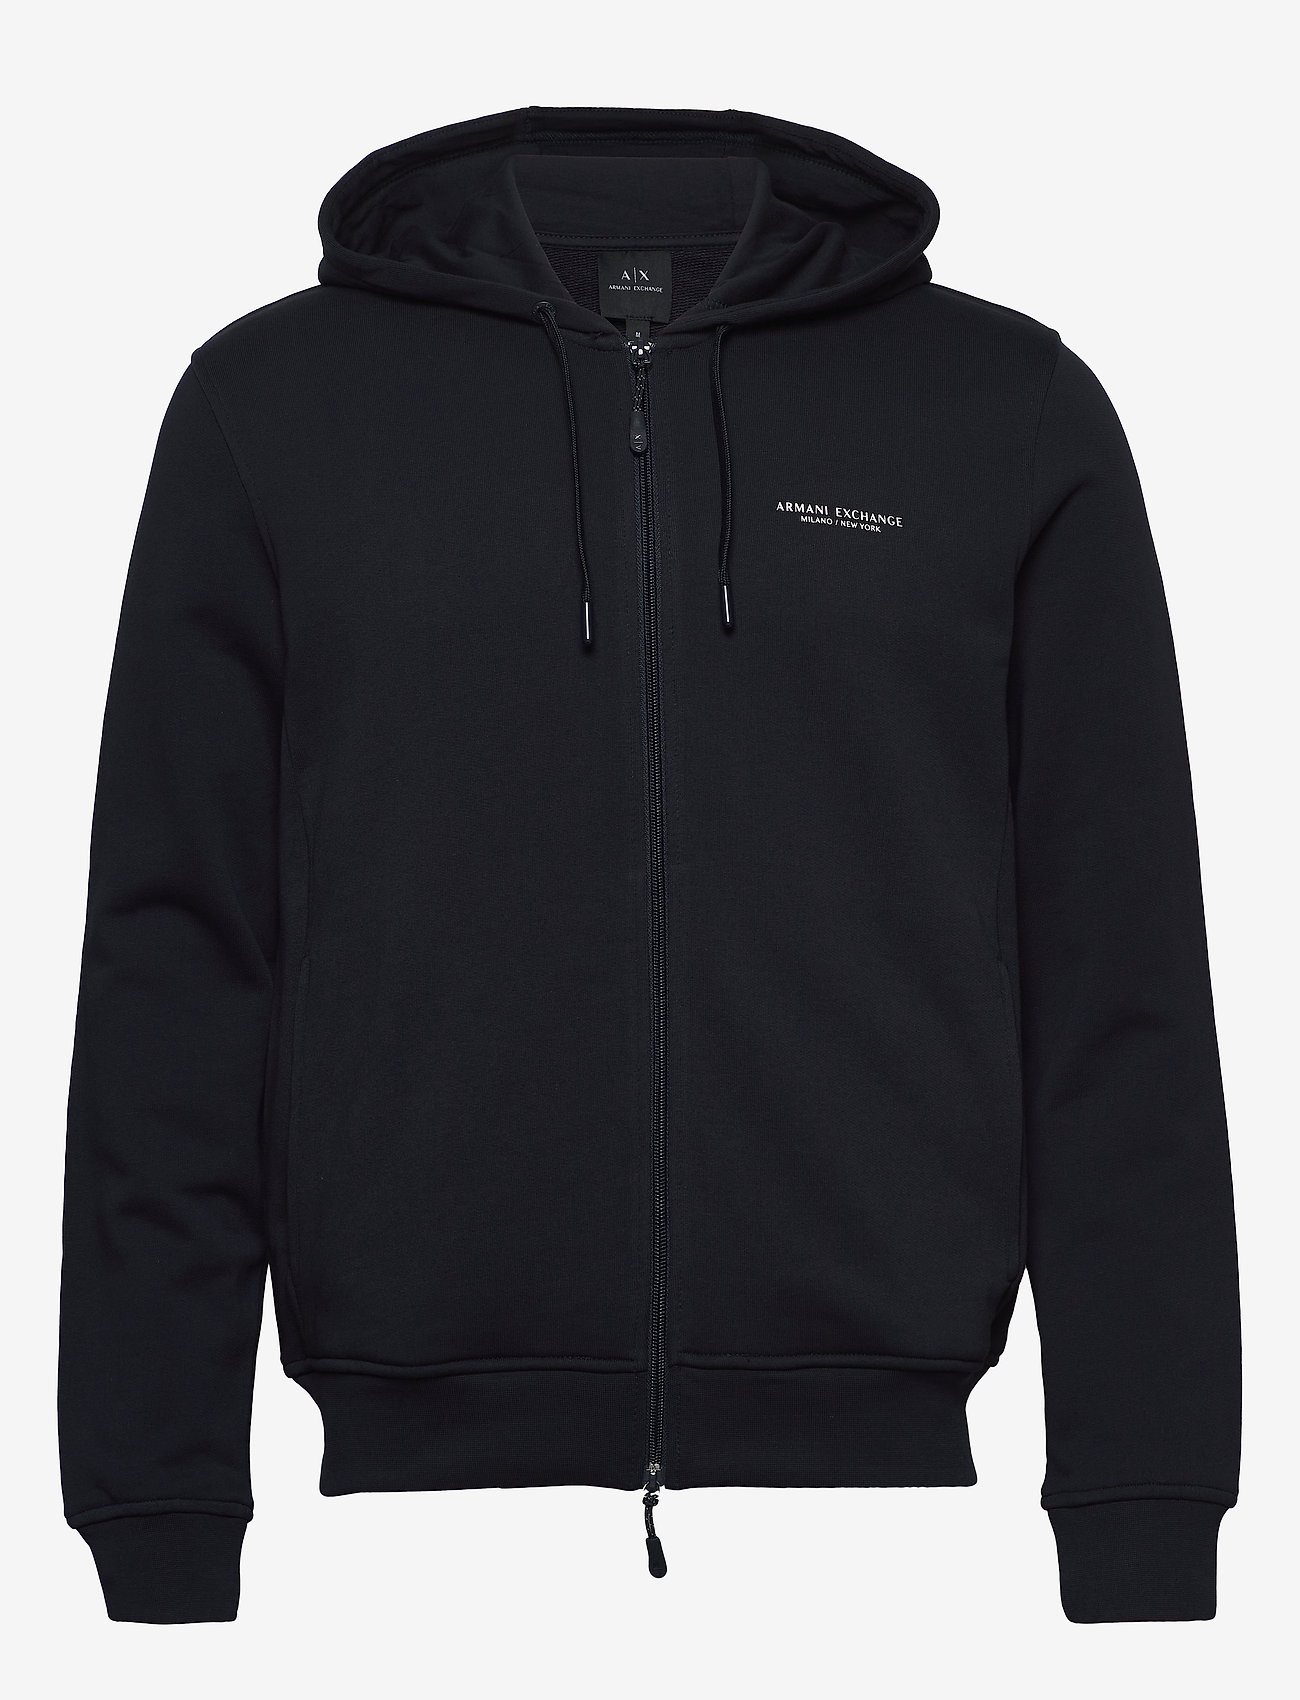 armani exchange zip up hoodie